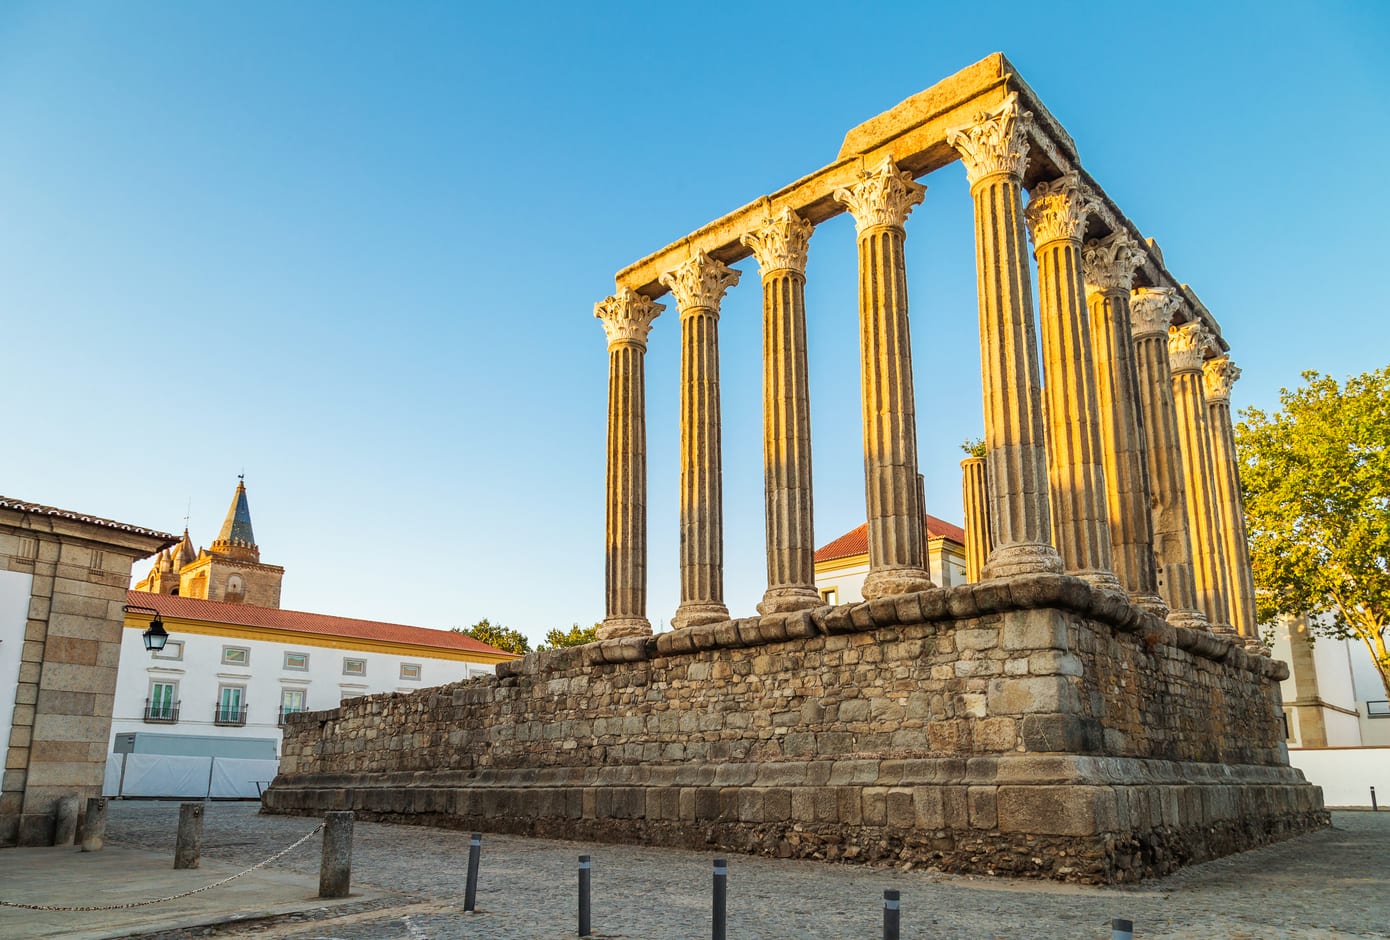 The Roman Temple of Évora, also referred to as the Templo de Diana.
